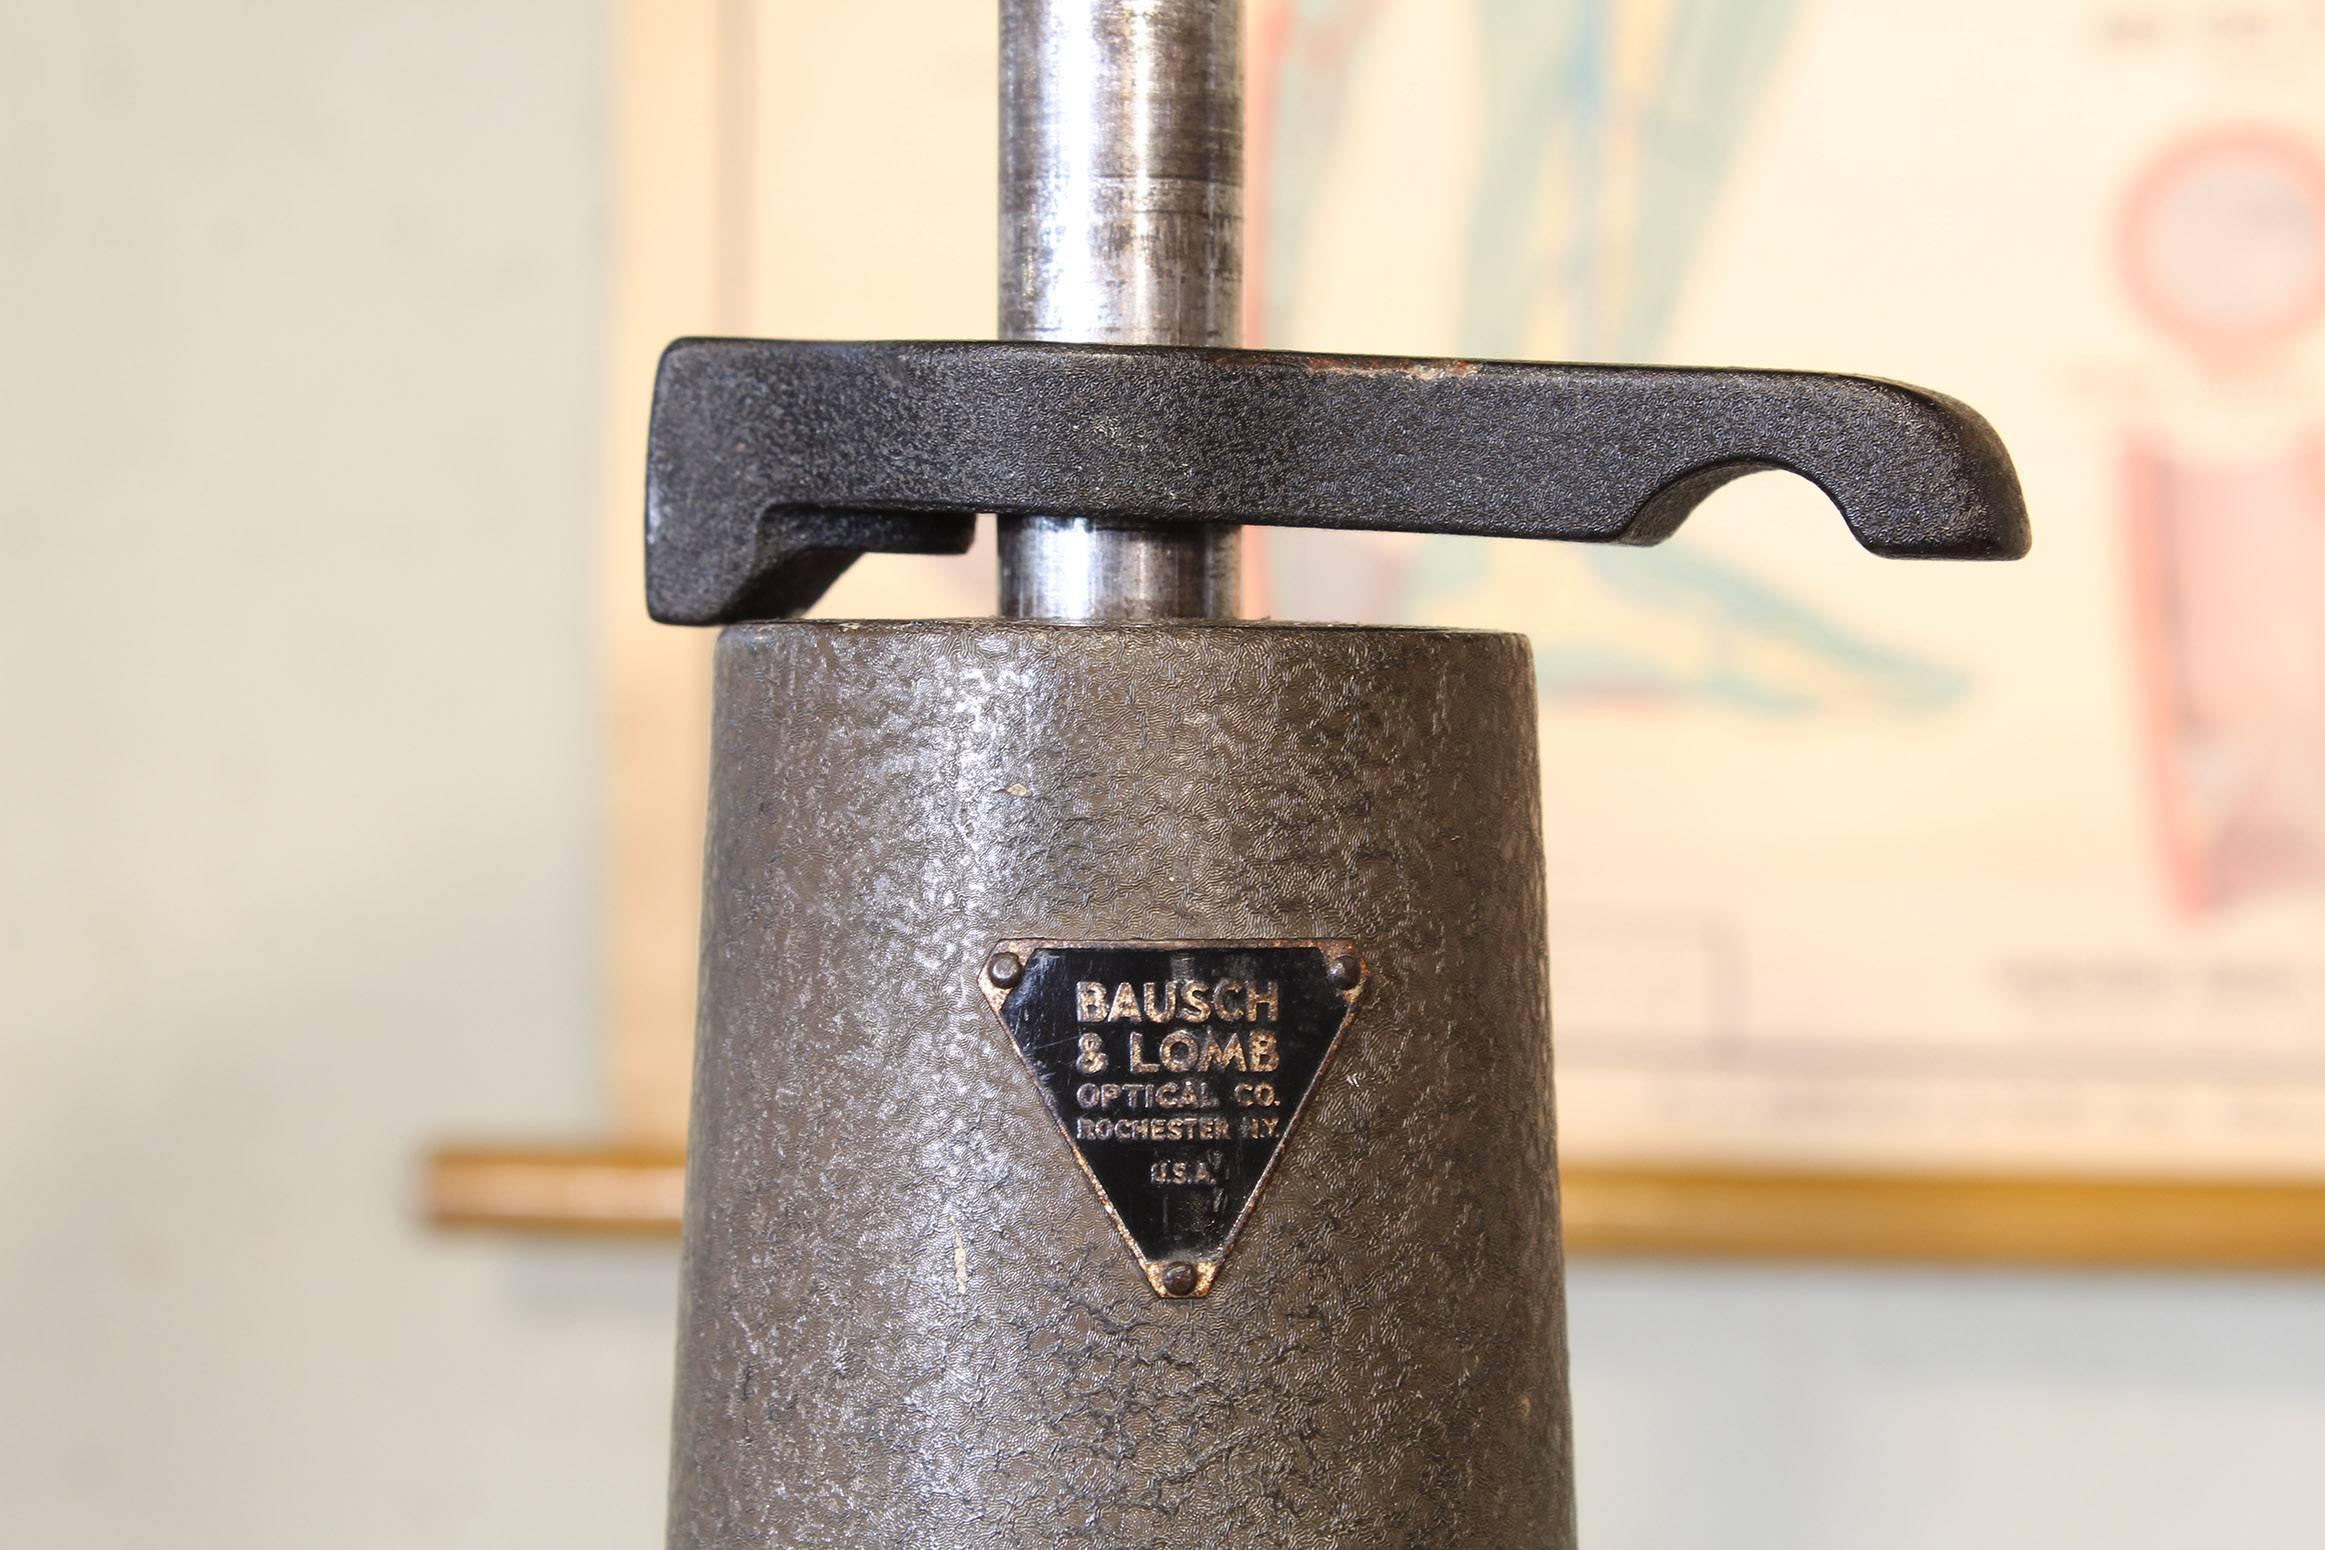 Optician's Stool - Original Bausch & Lomb Medical Adjustable Rolling 3